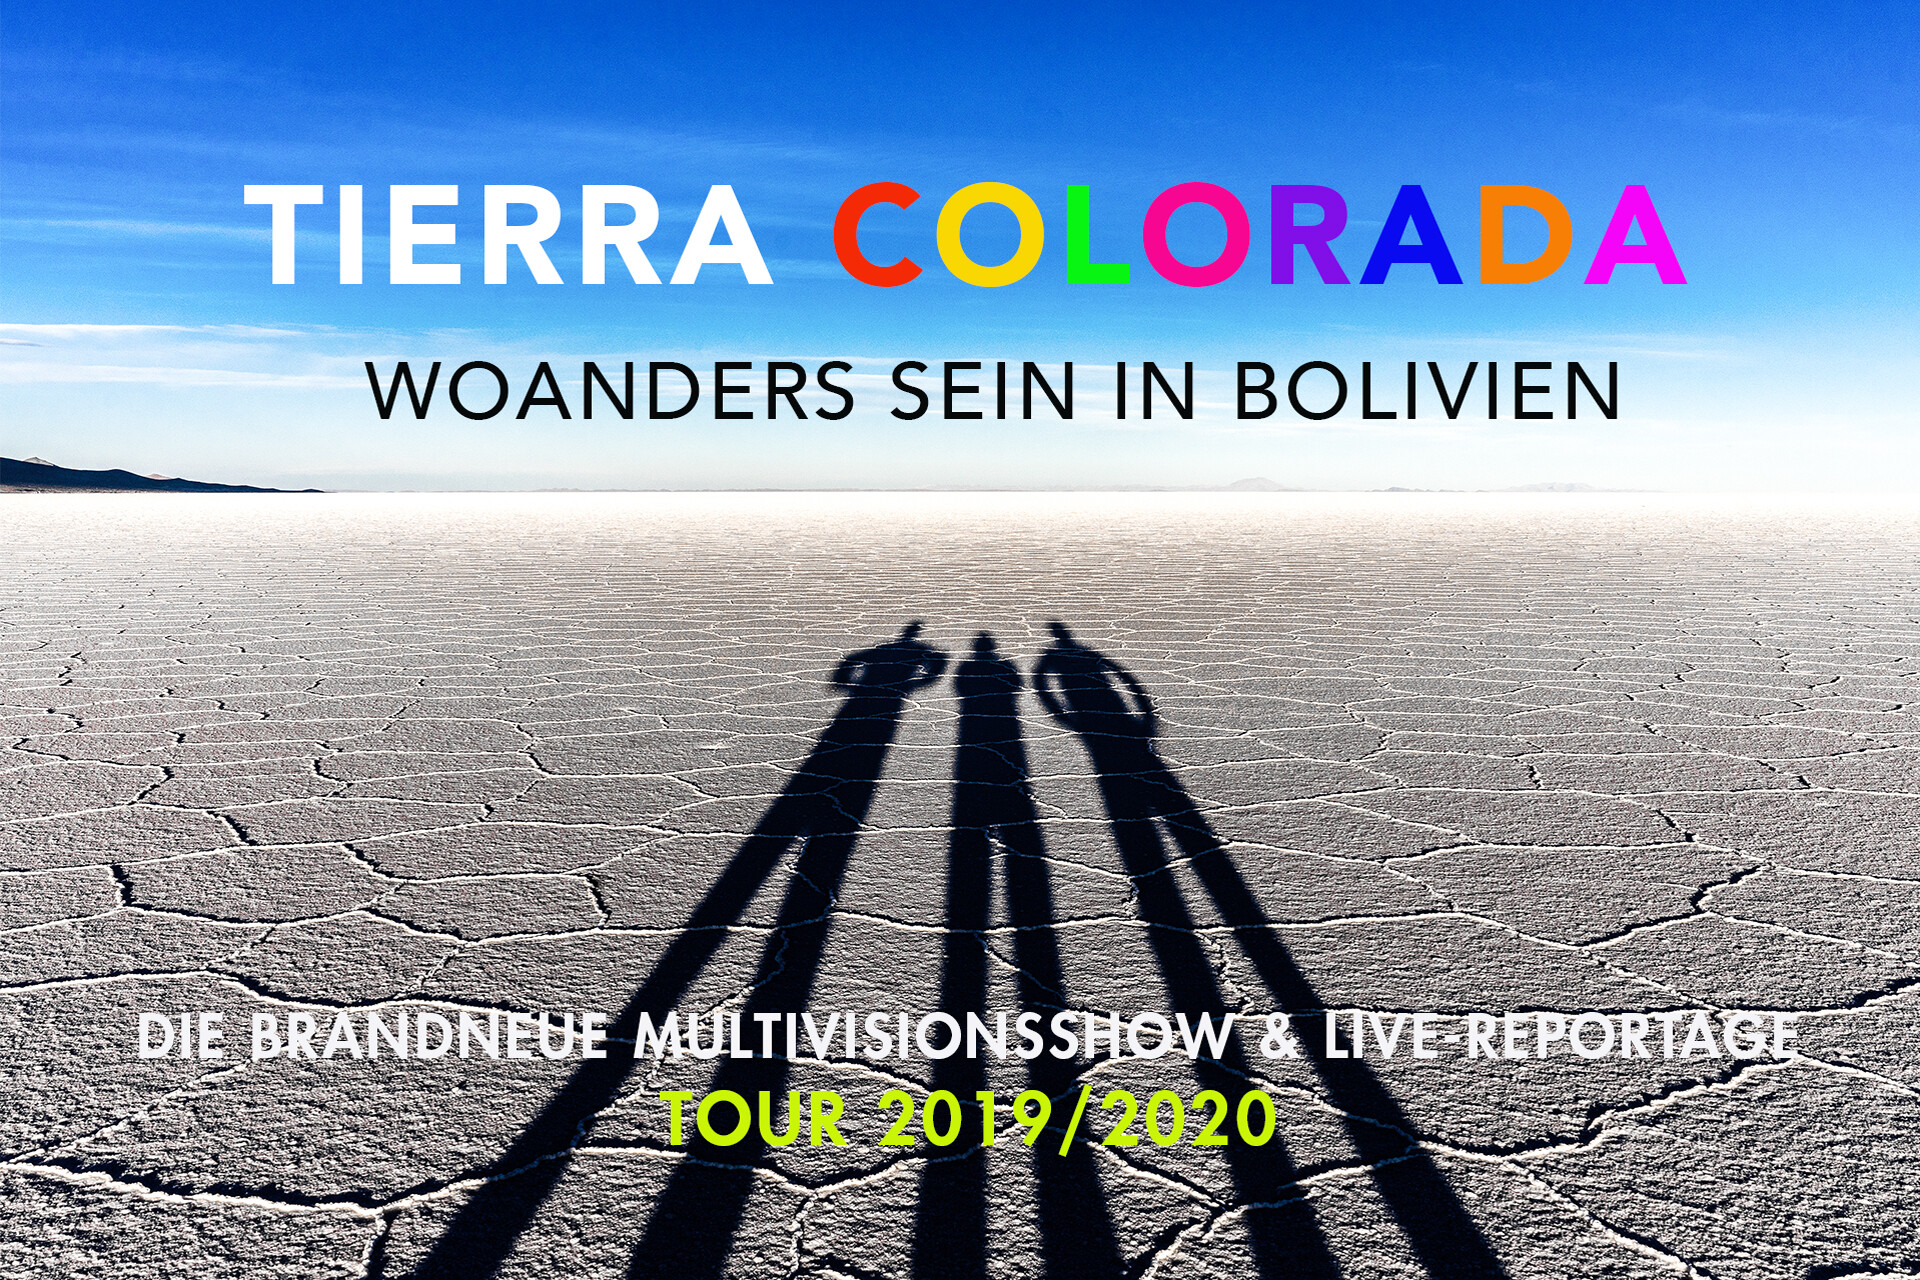 MULTIVISIONSSHOW & LIVE-REPORTAGE "TIERRA COLORADA - WOANDERS SEIN IN BOLIVIEN"